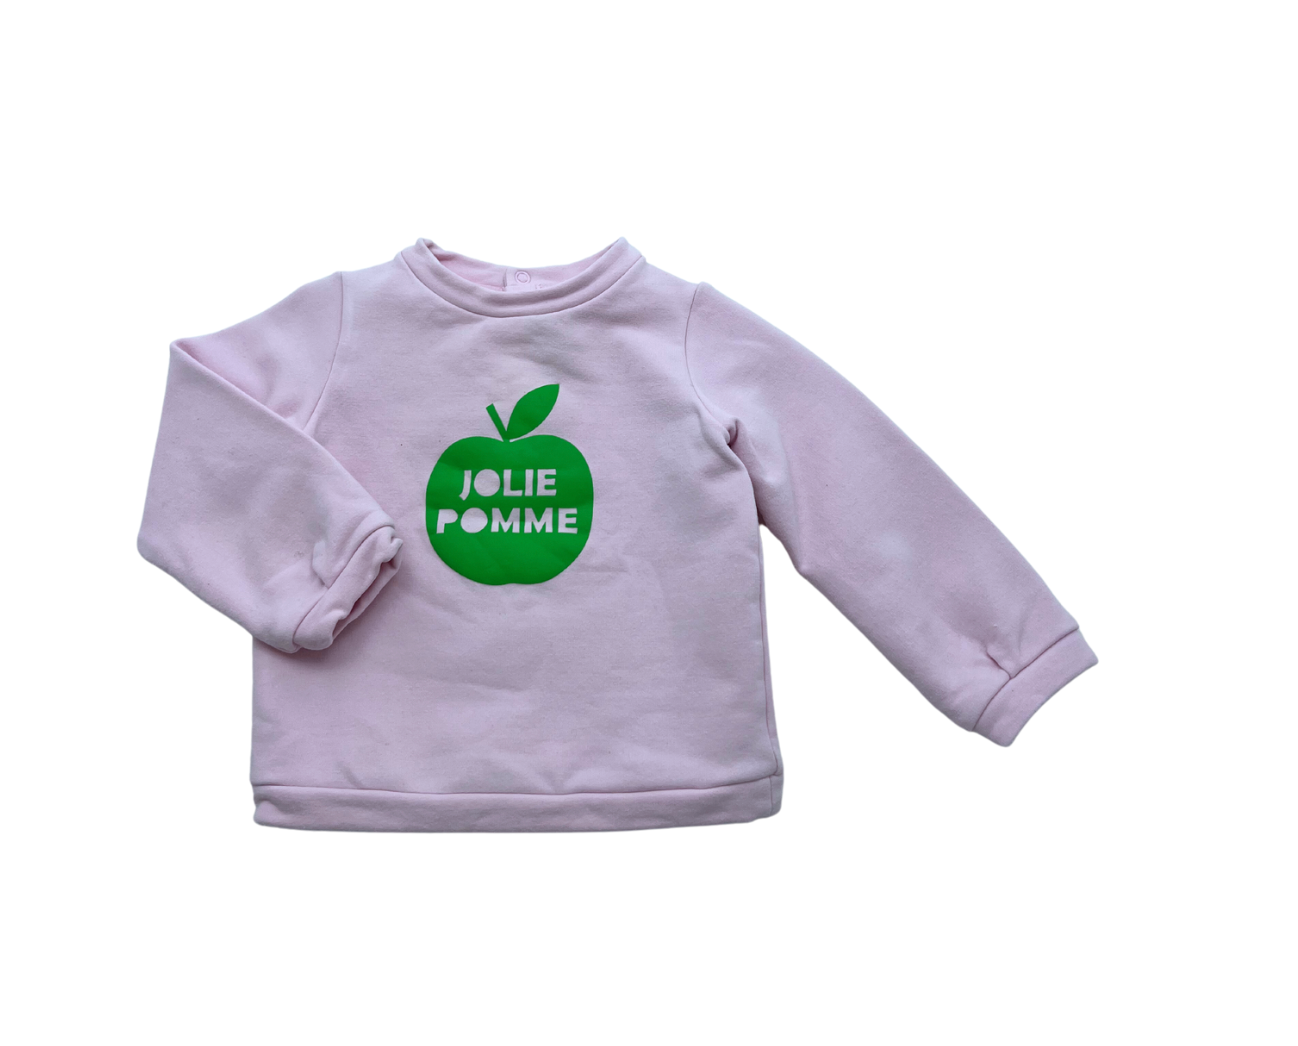 JACADI - Pretty apple sweatshirt - 24 months